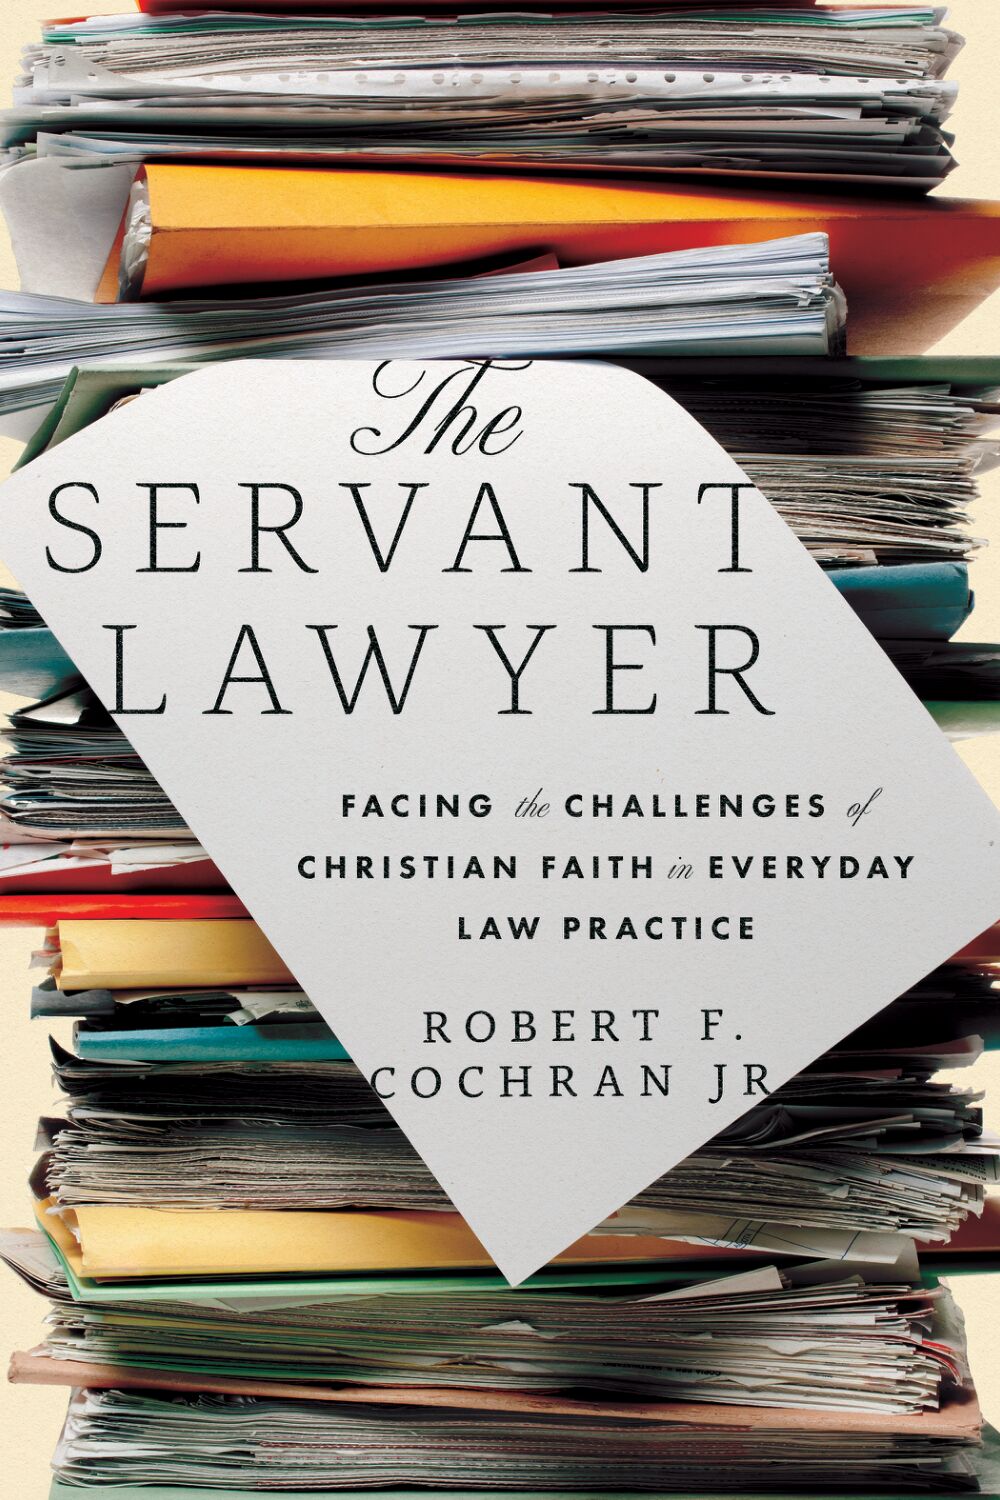 The Servant Lawyer by Robert F. Cochran